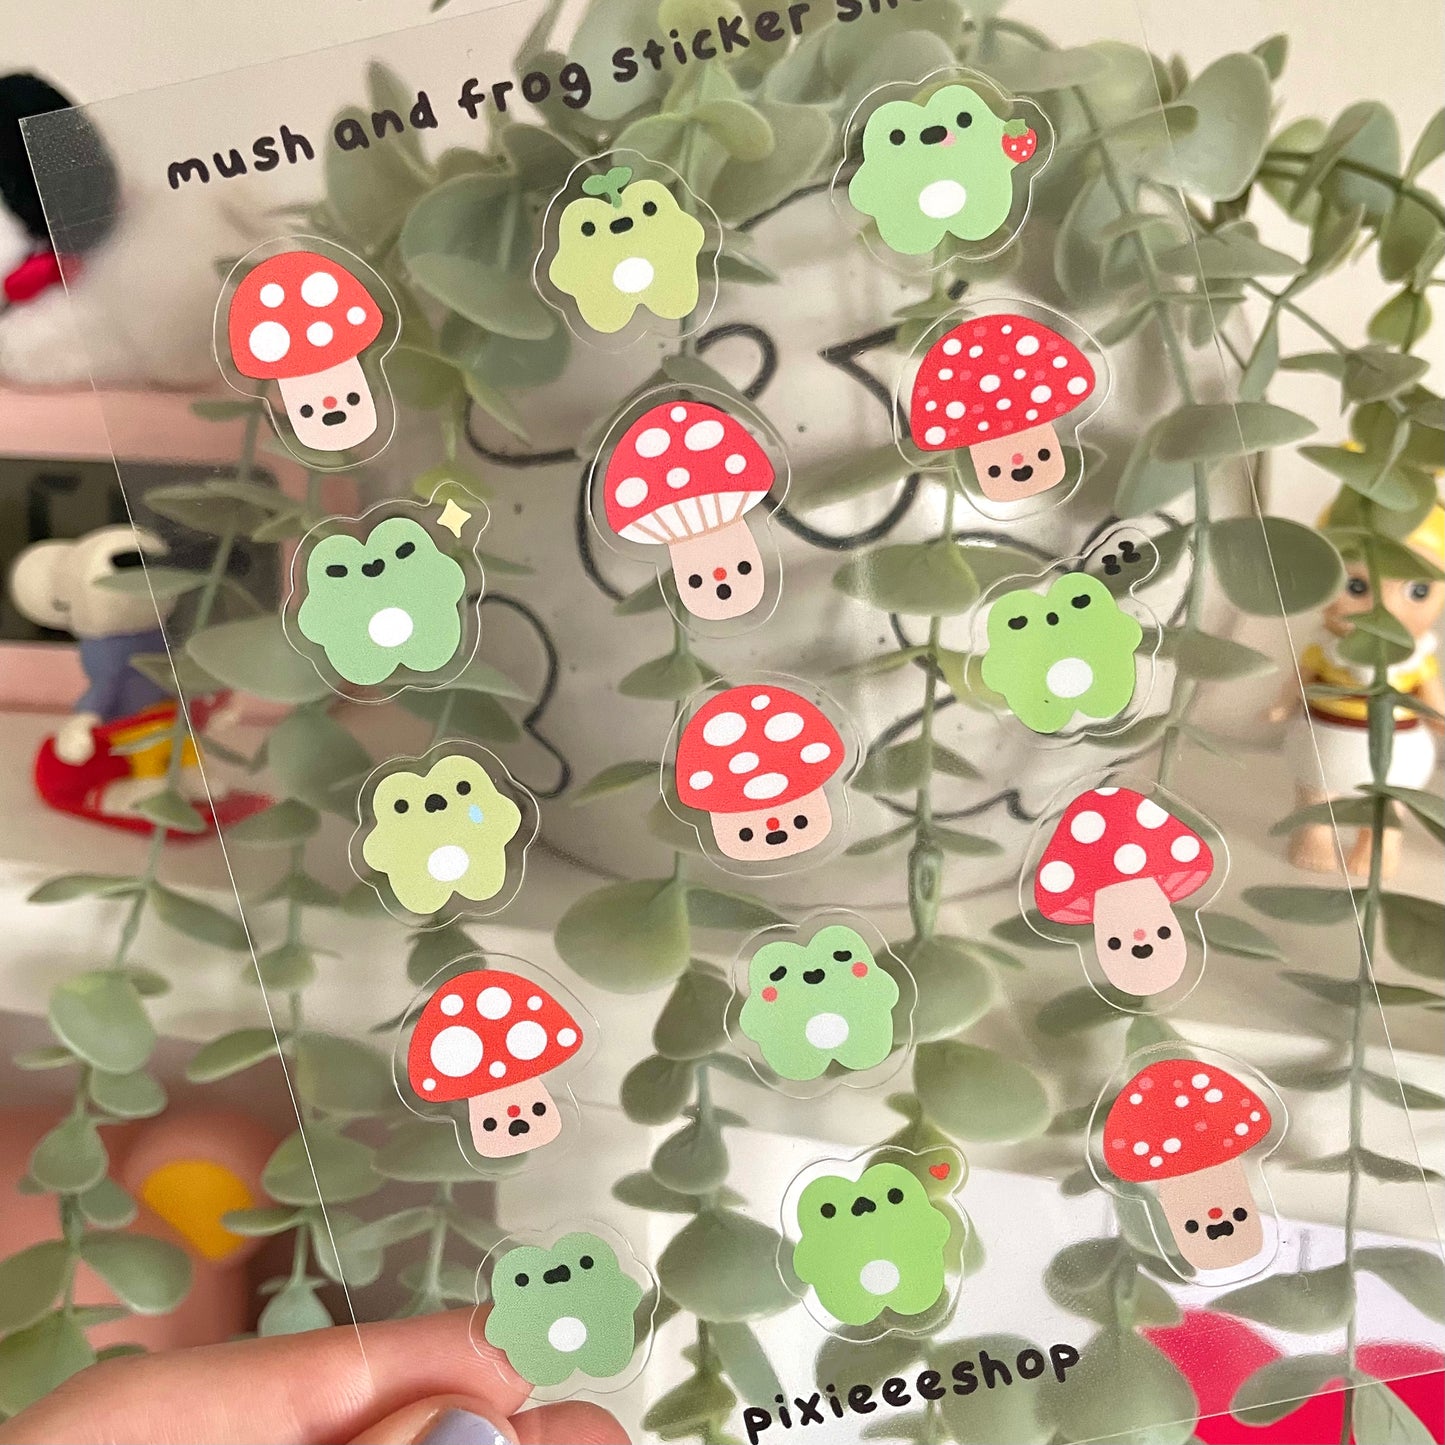 Mush and Frog Sticker Sheet